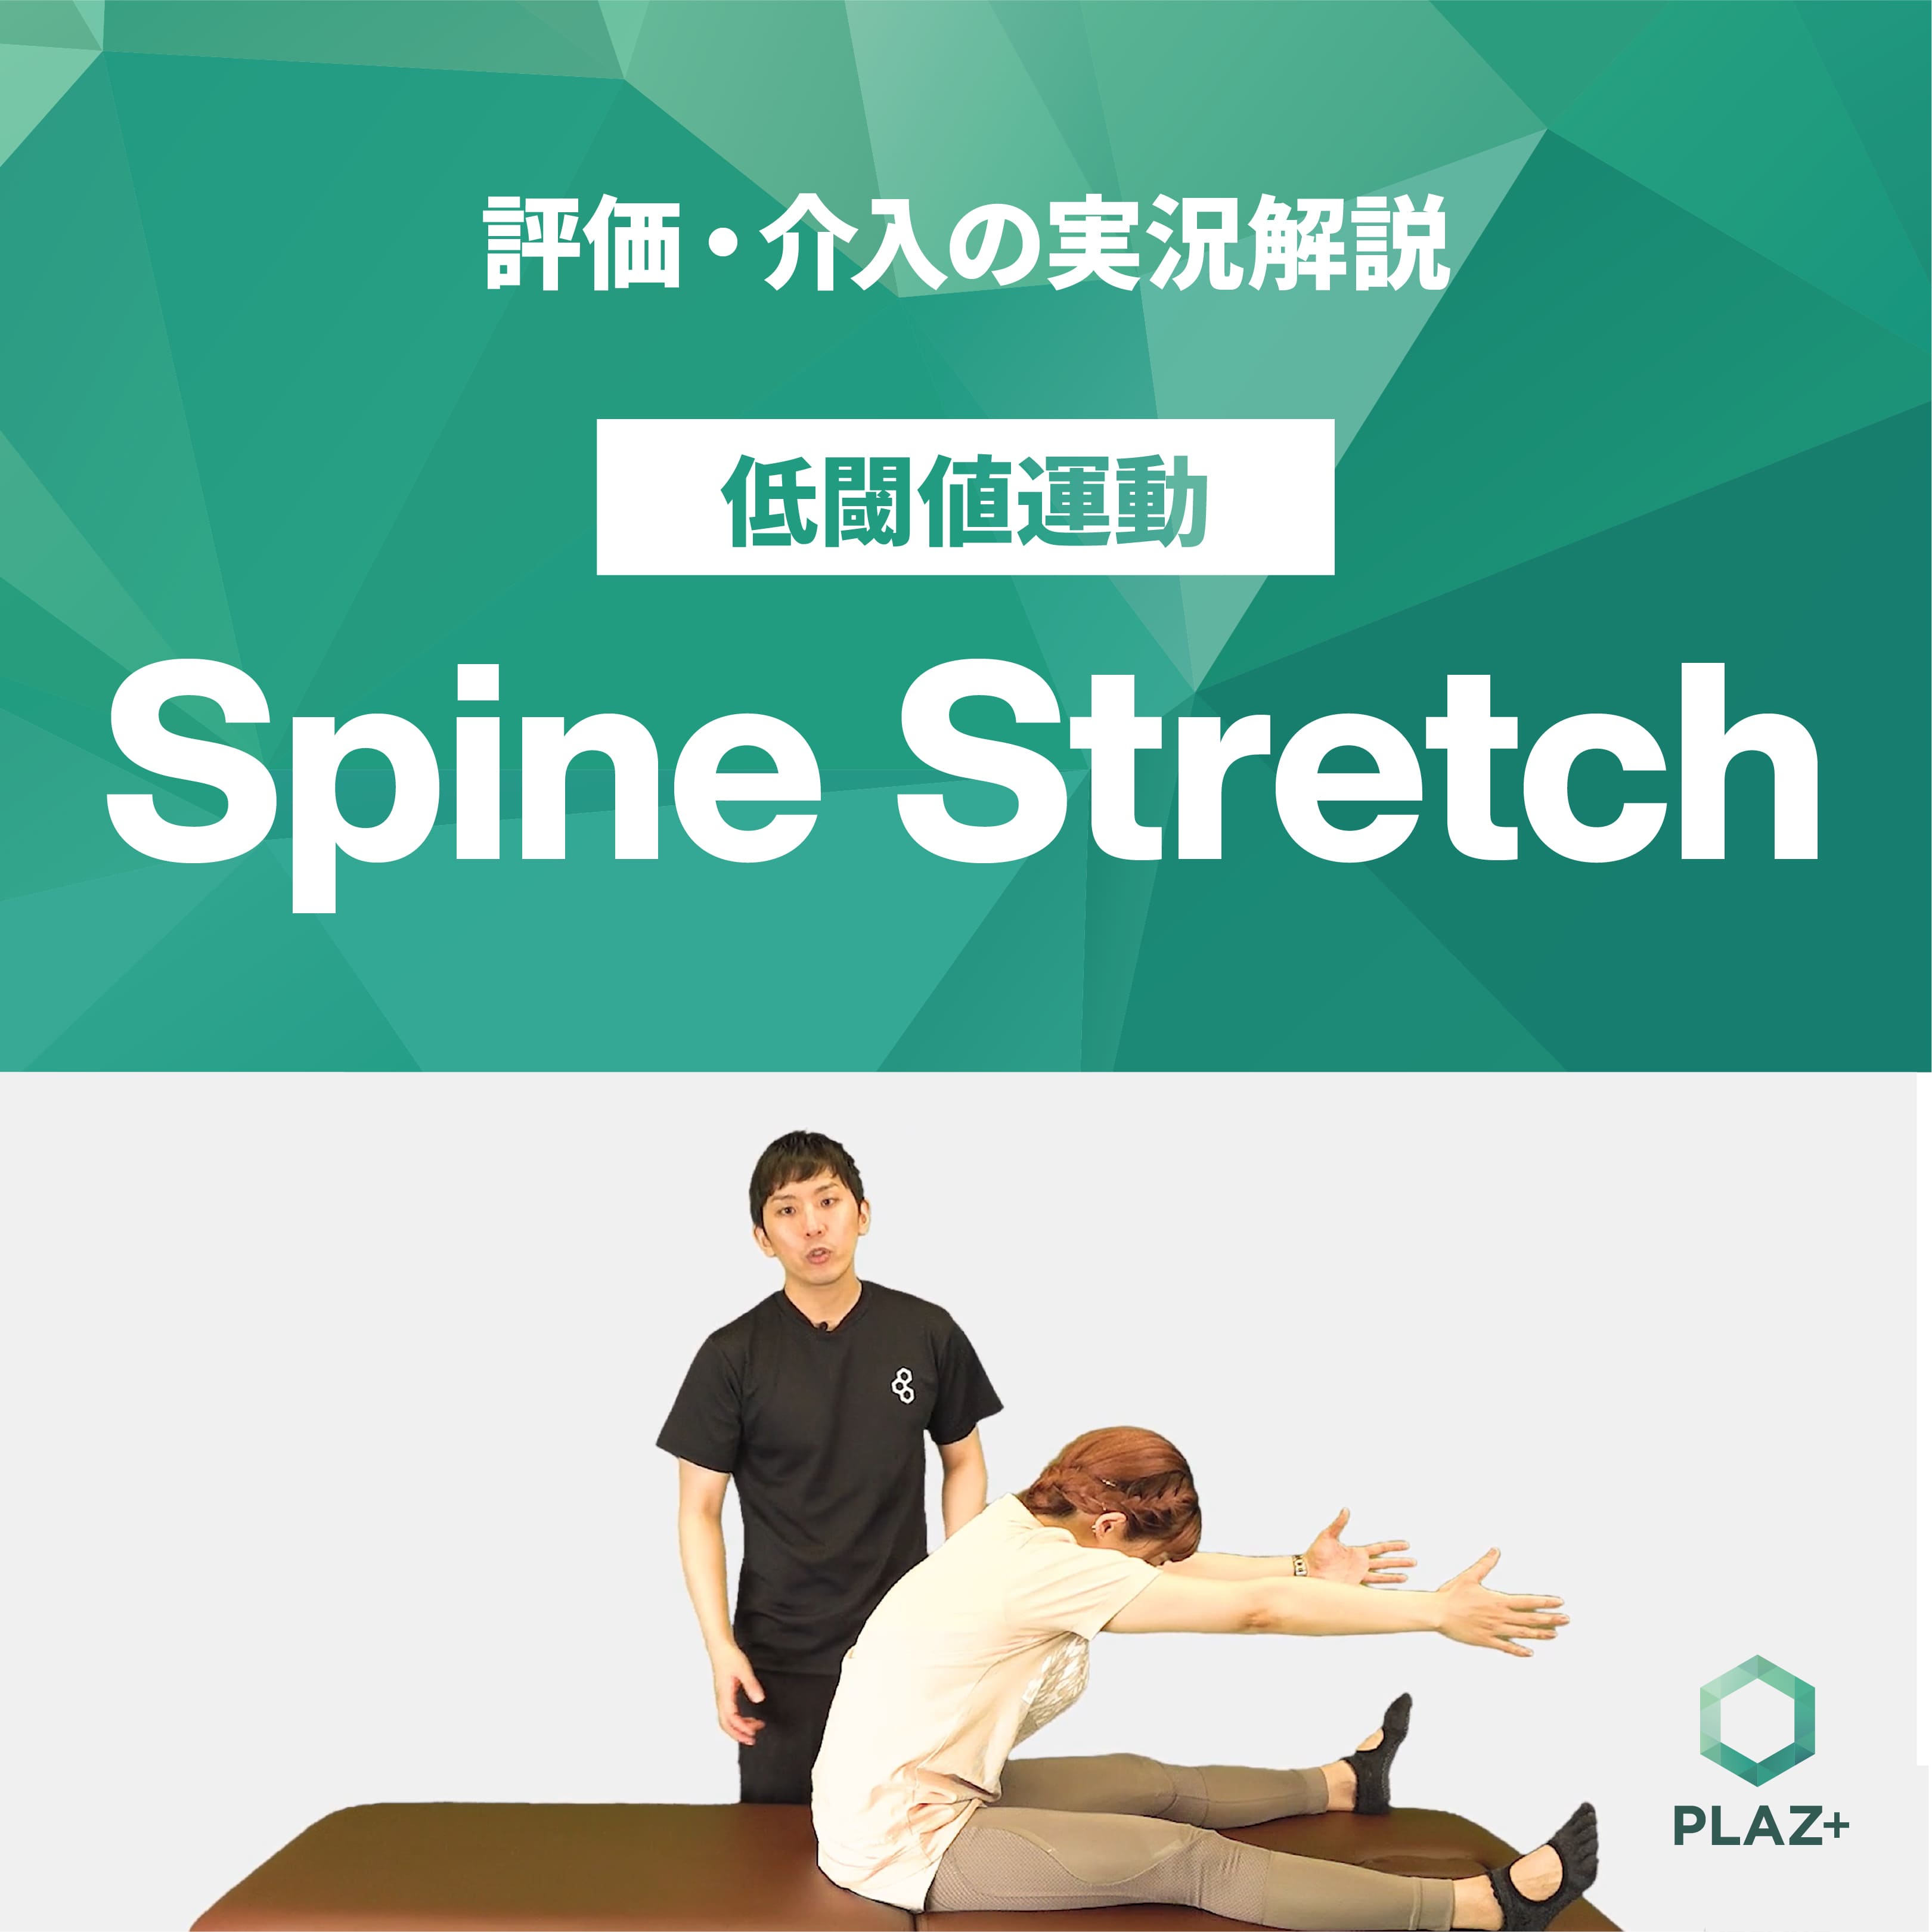 Spine Stretch